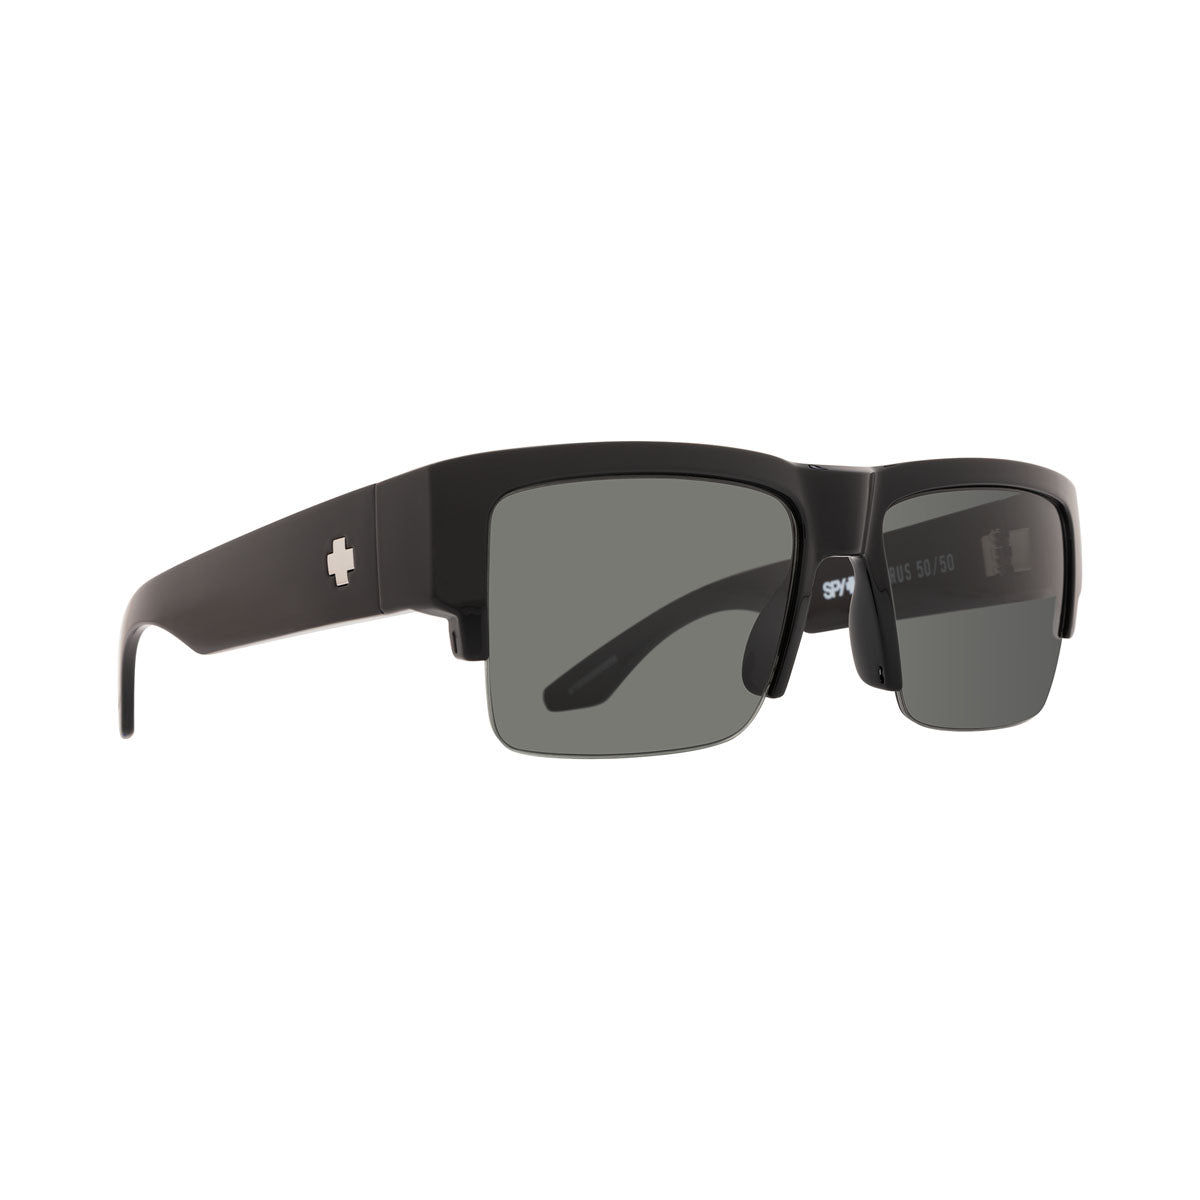 Spy Cyrus 5050 Sunglasses